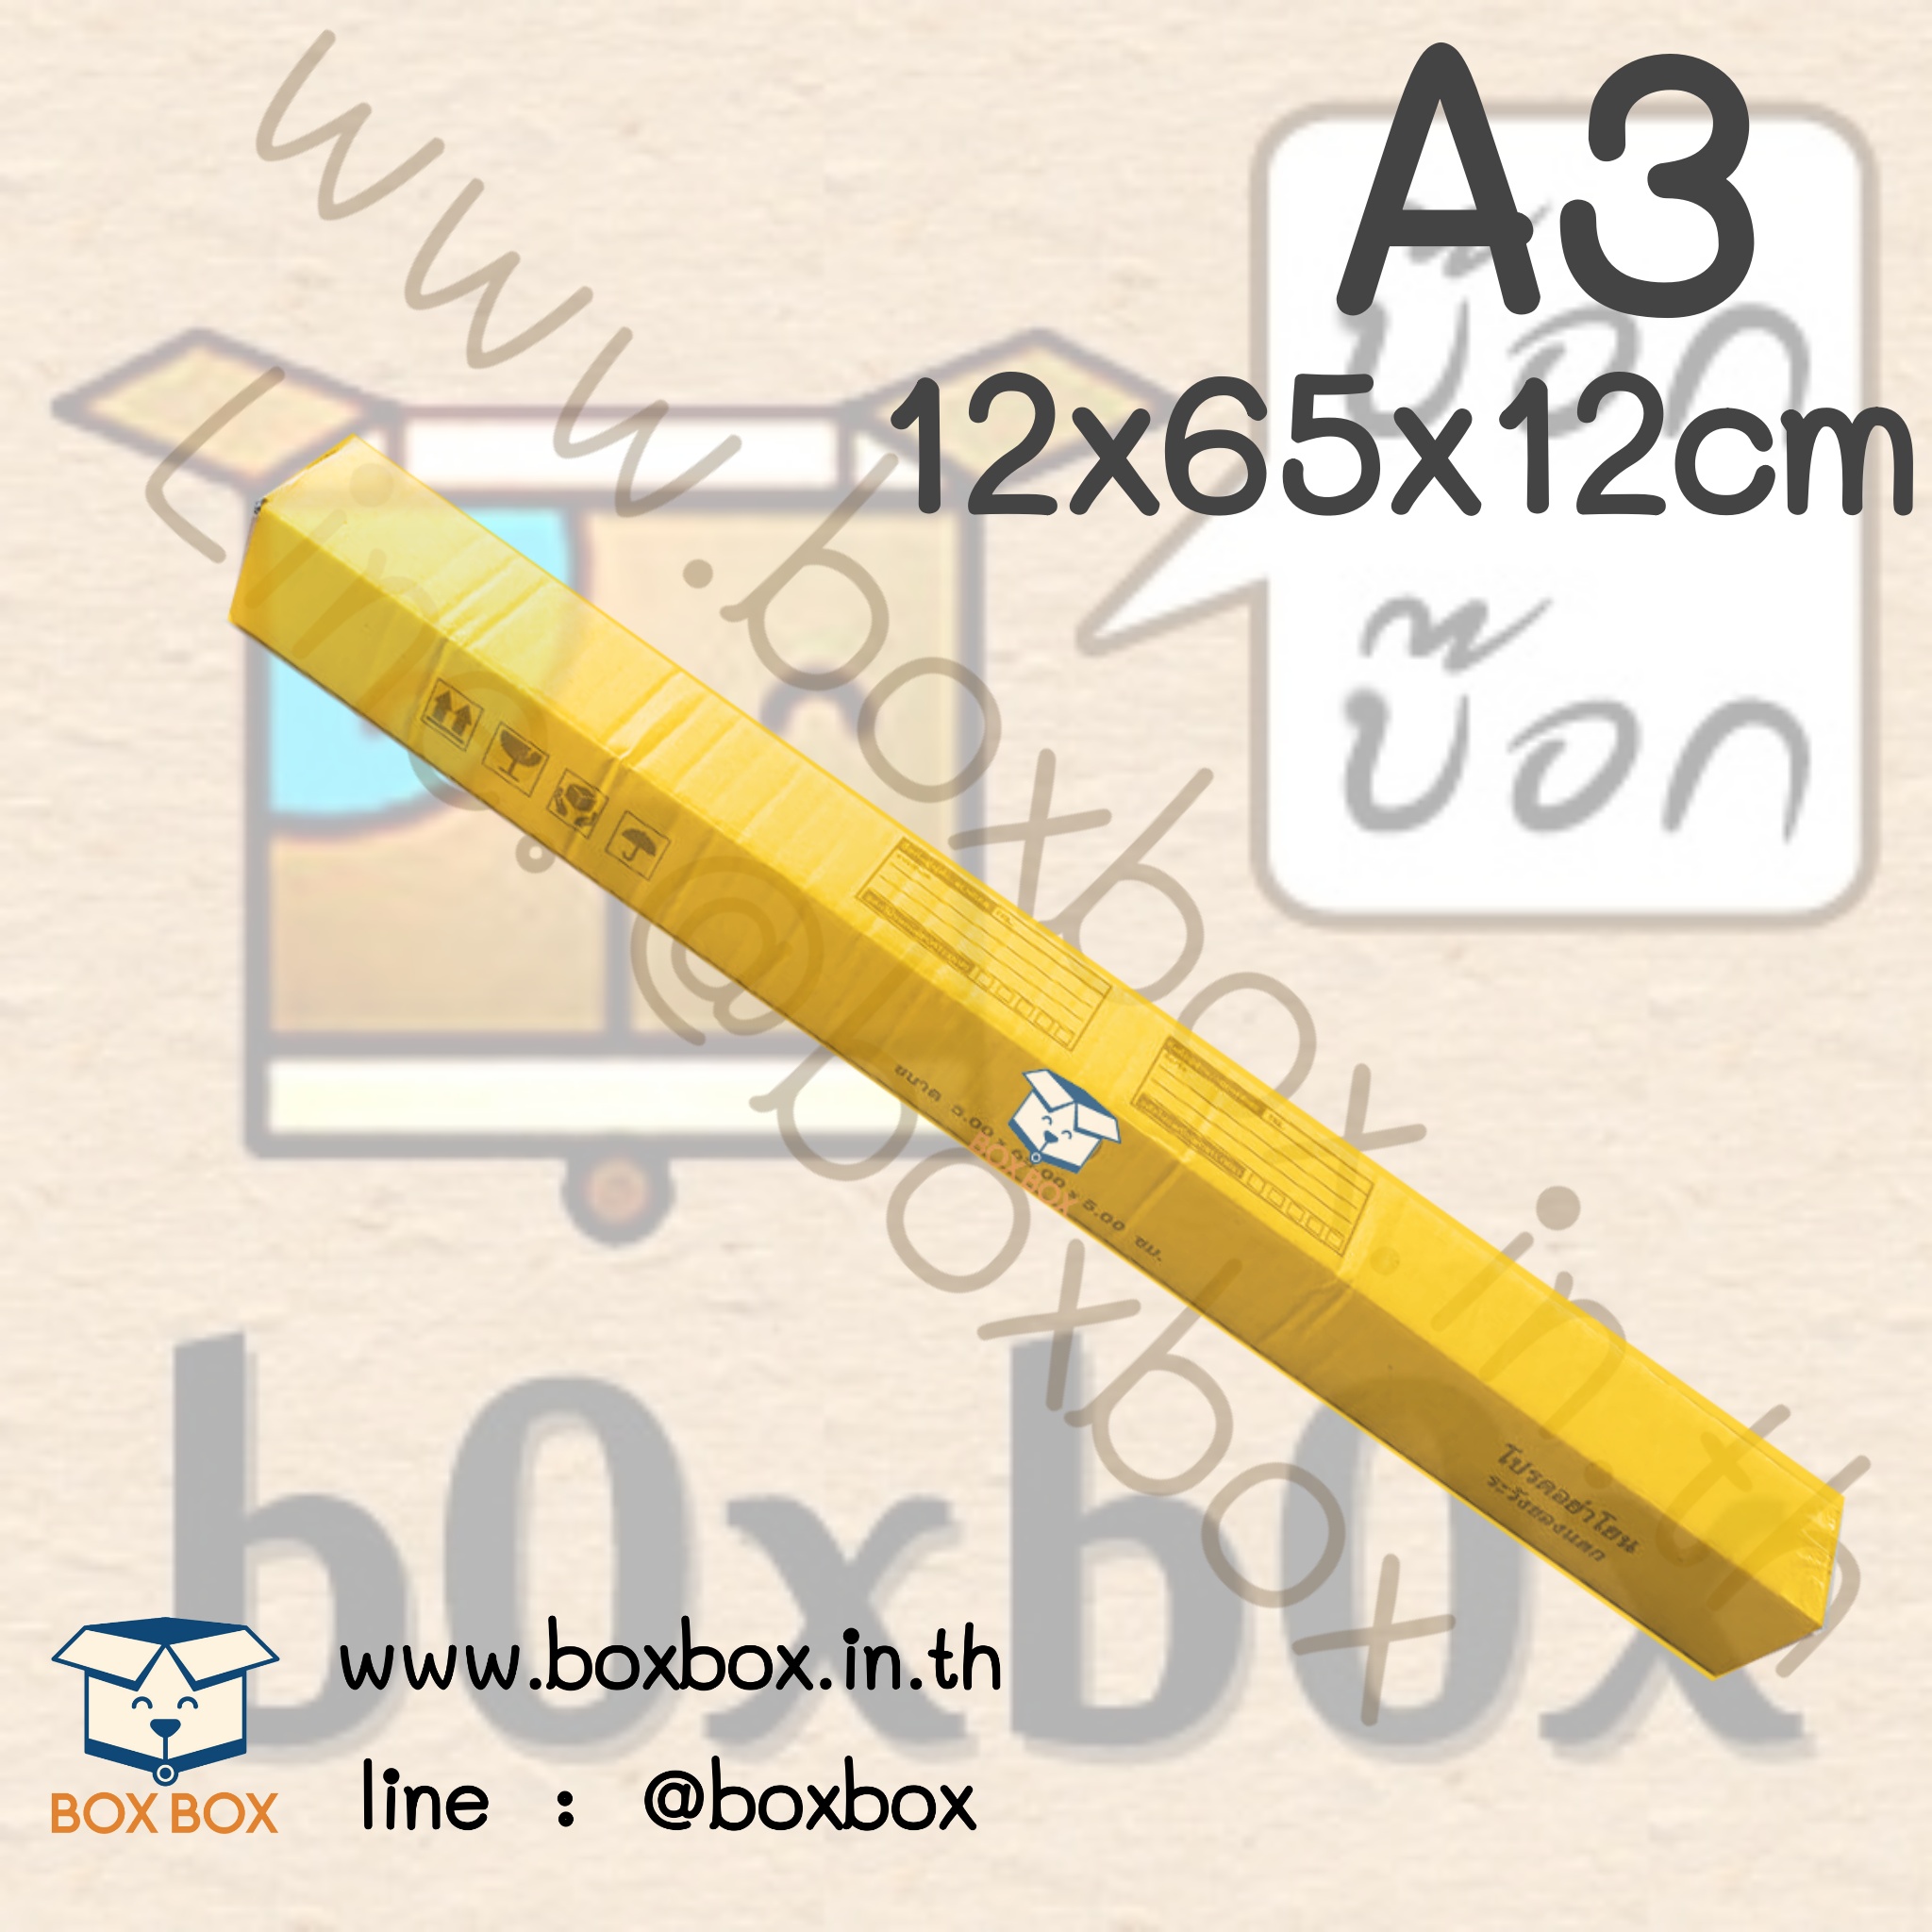 Boxbox กล่องพัสดุ โปสเตอร์ ไปรษณีย์ ขนาด A3 [12x65x12ซม] 10 ใบ